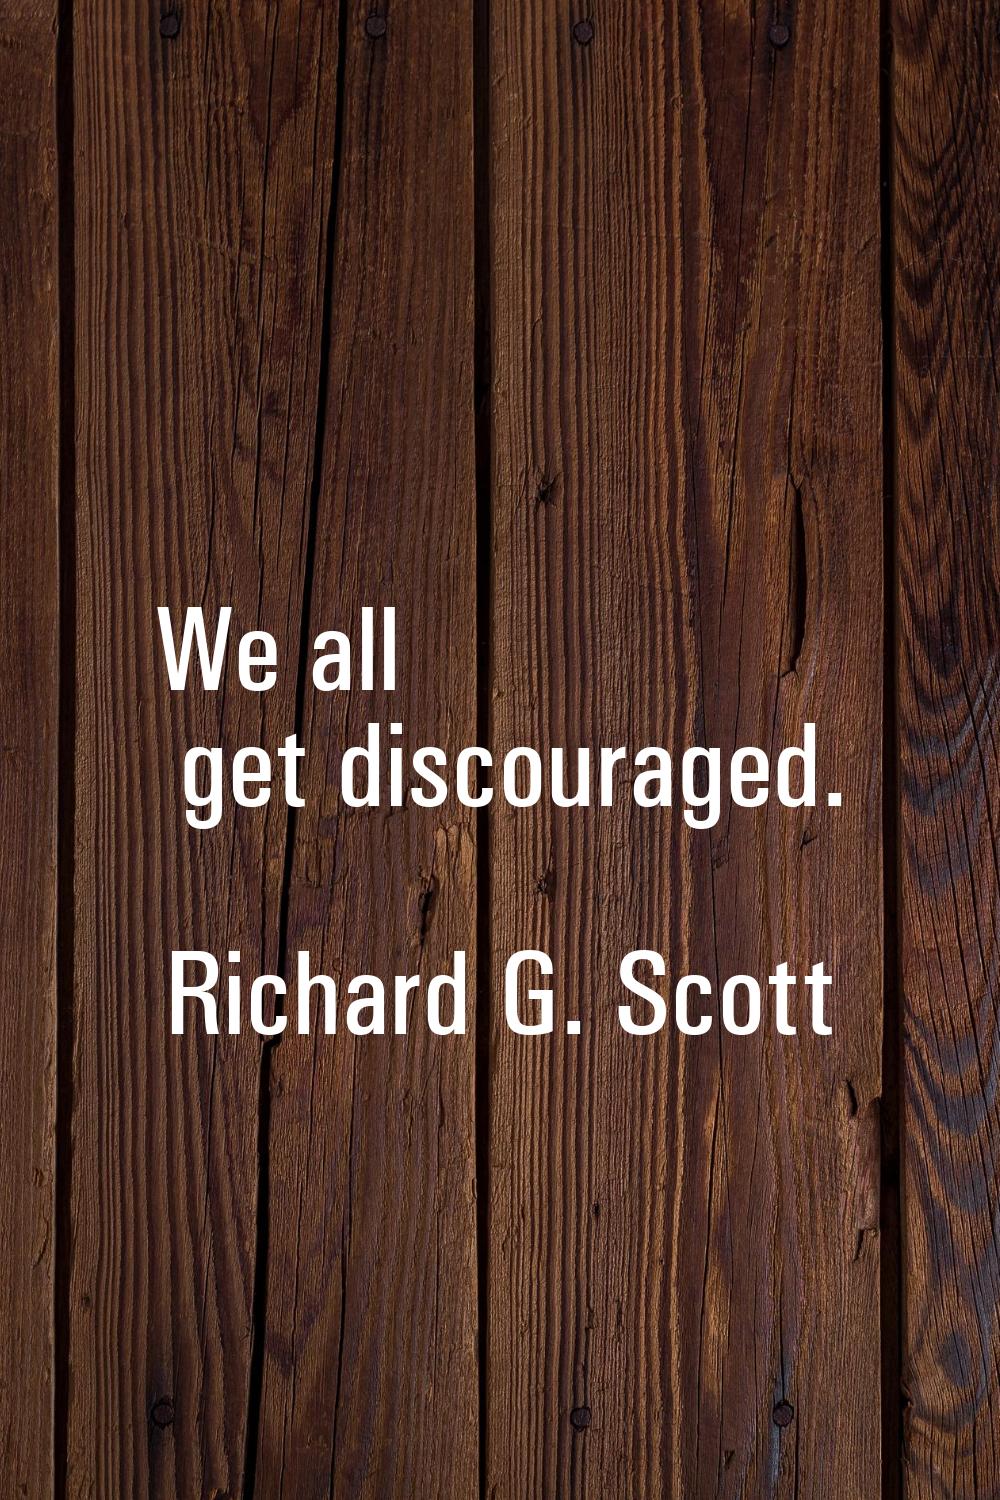 We all get discouraged.